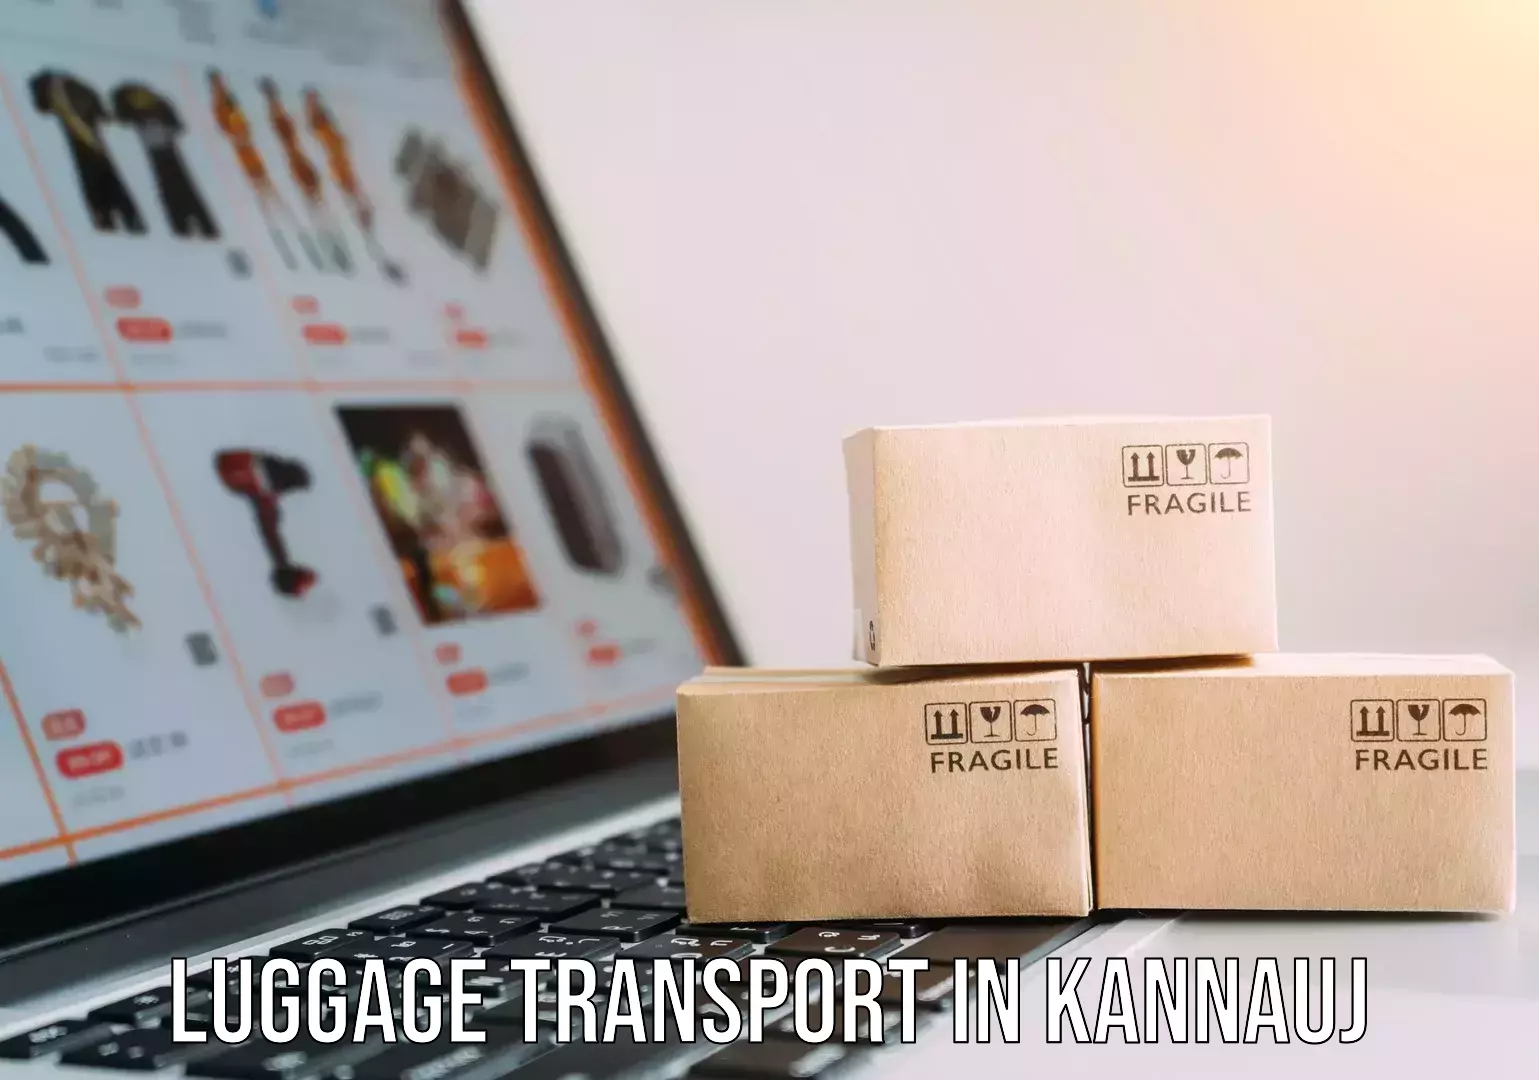 Luggage transport operations in Kannauj